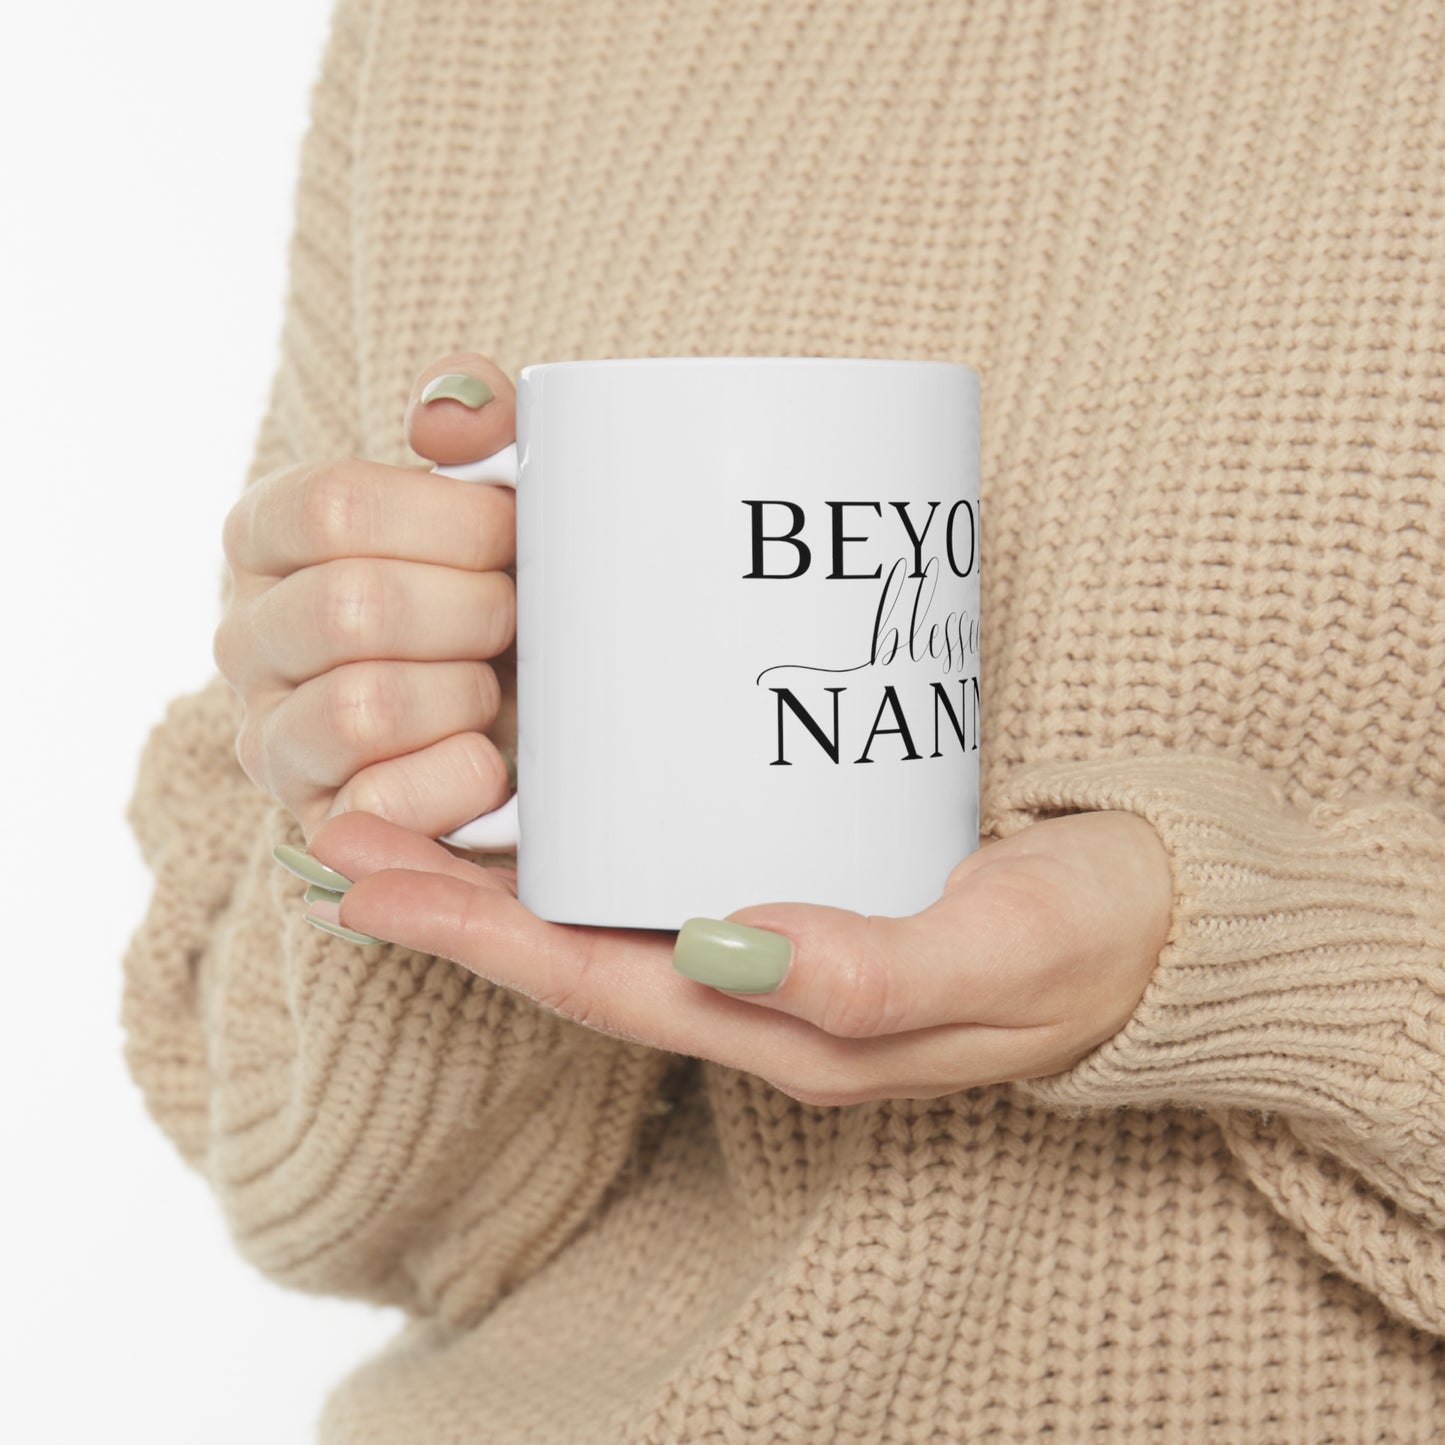 Beyond Blessed Nanny - Plain Ceramic Mug 11oz - Black